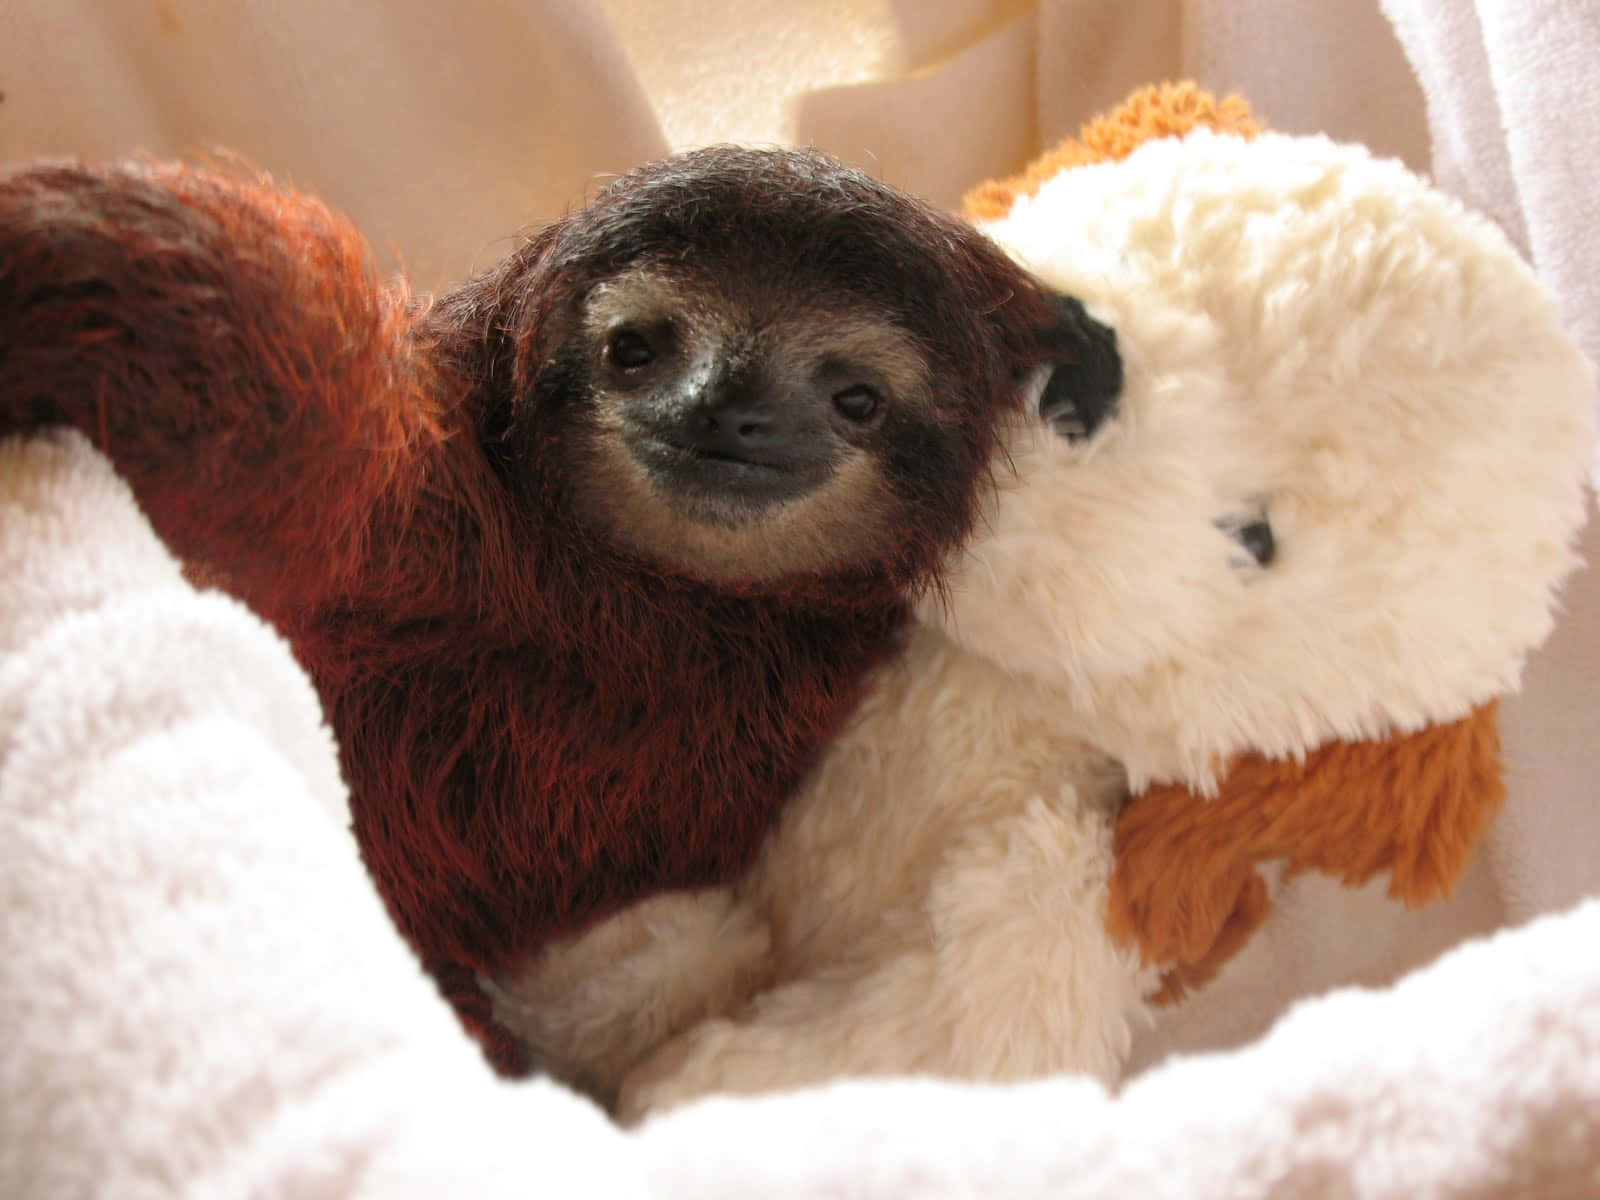 Adorable Baby Sloth Taking a Nap